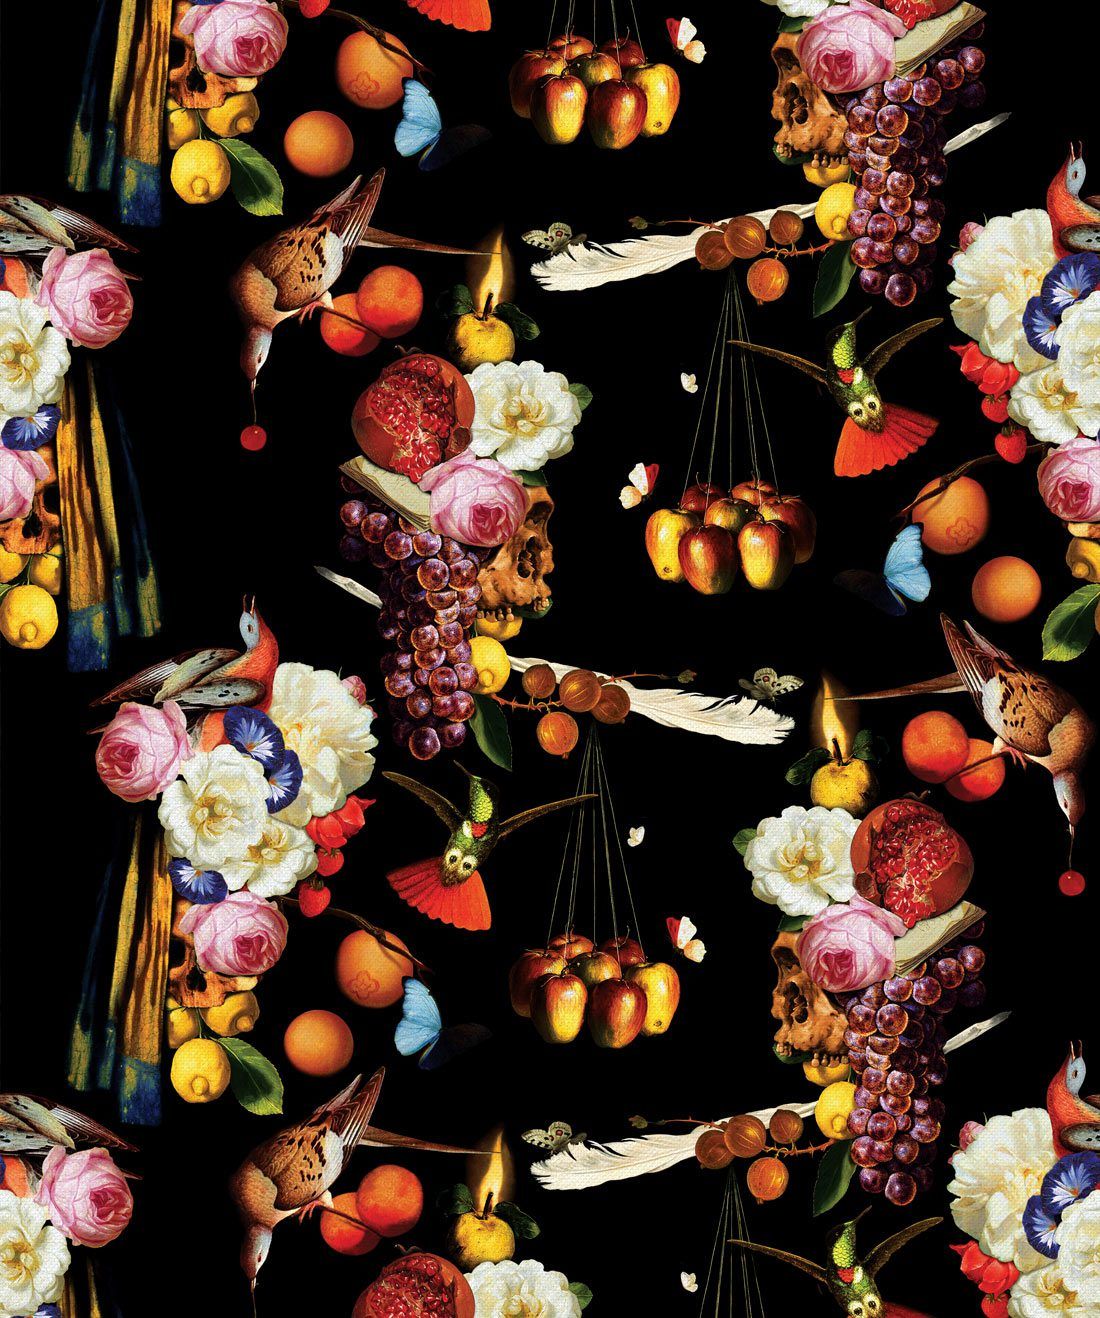 Gluttony is a Dark Fruit Wallpaper